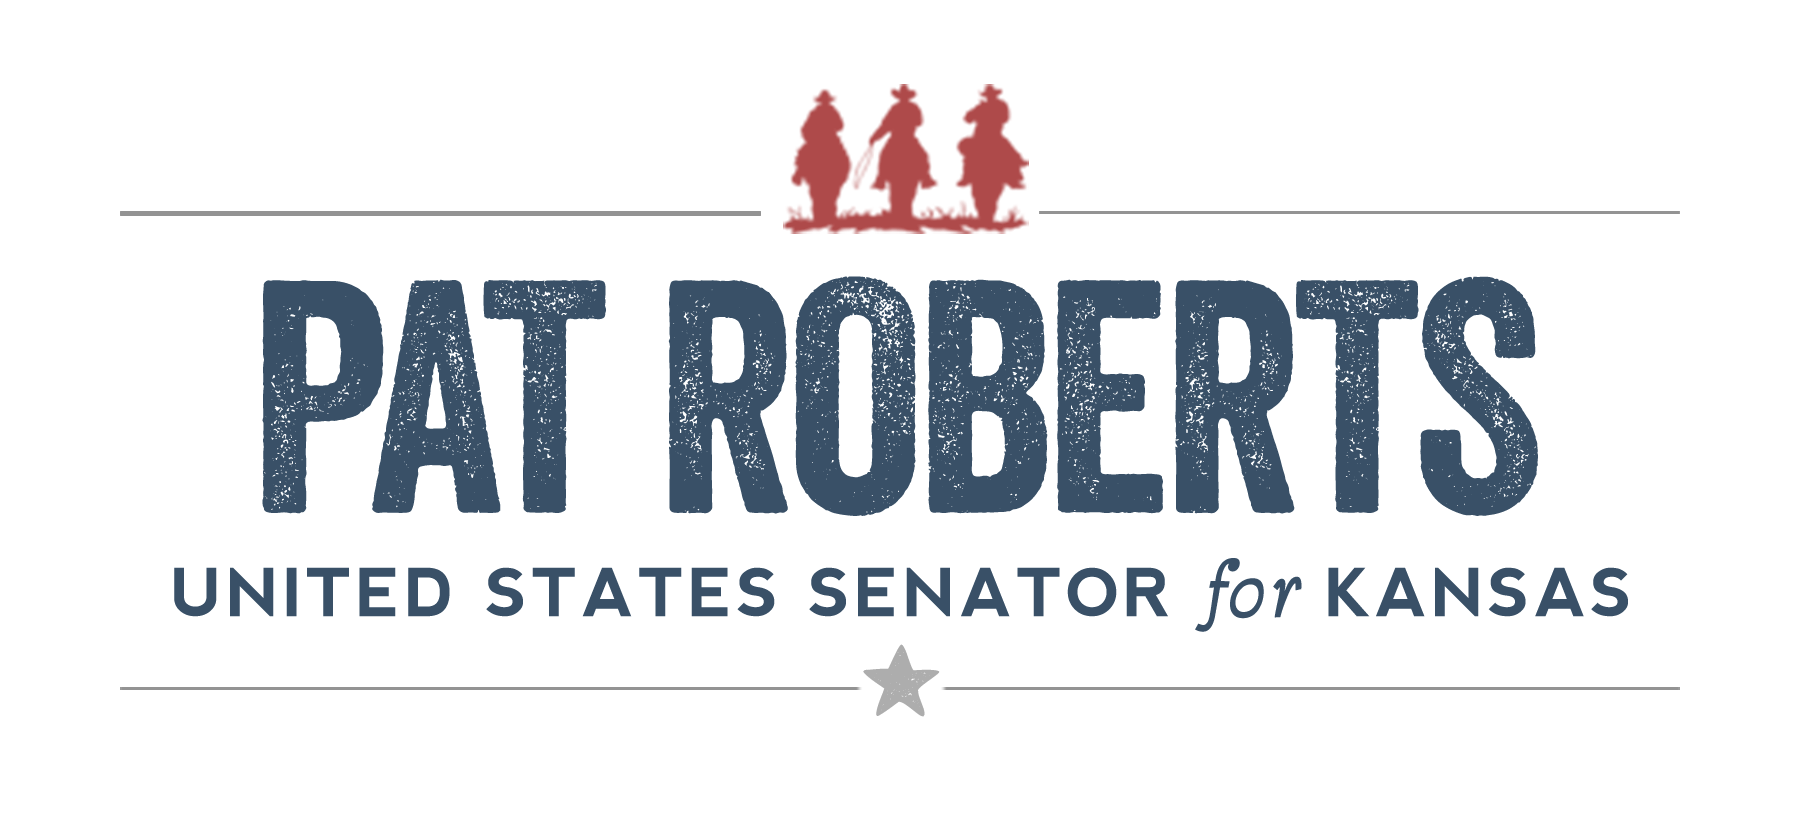 Roberts Logo.png